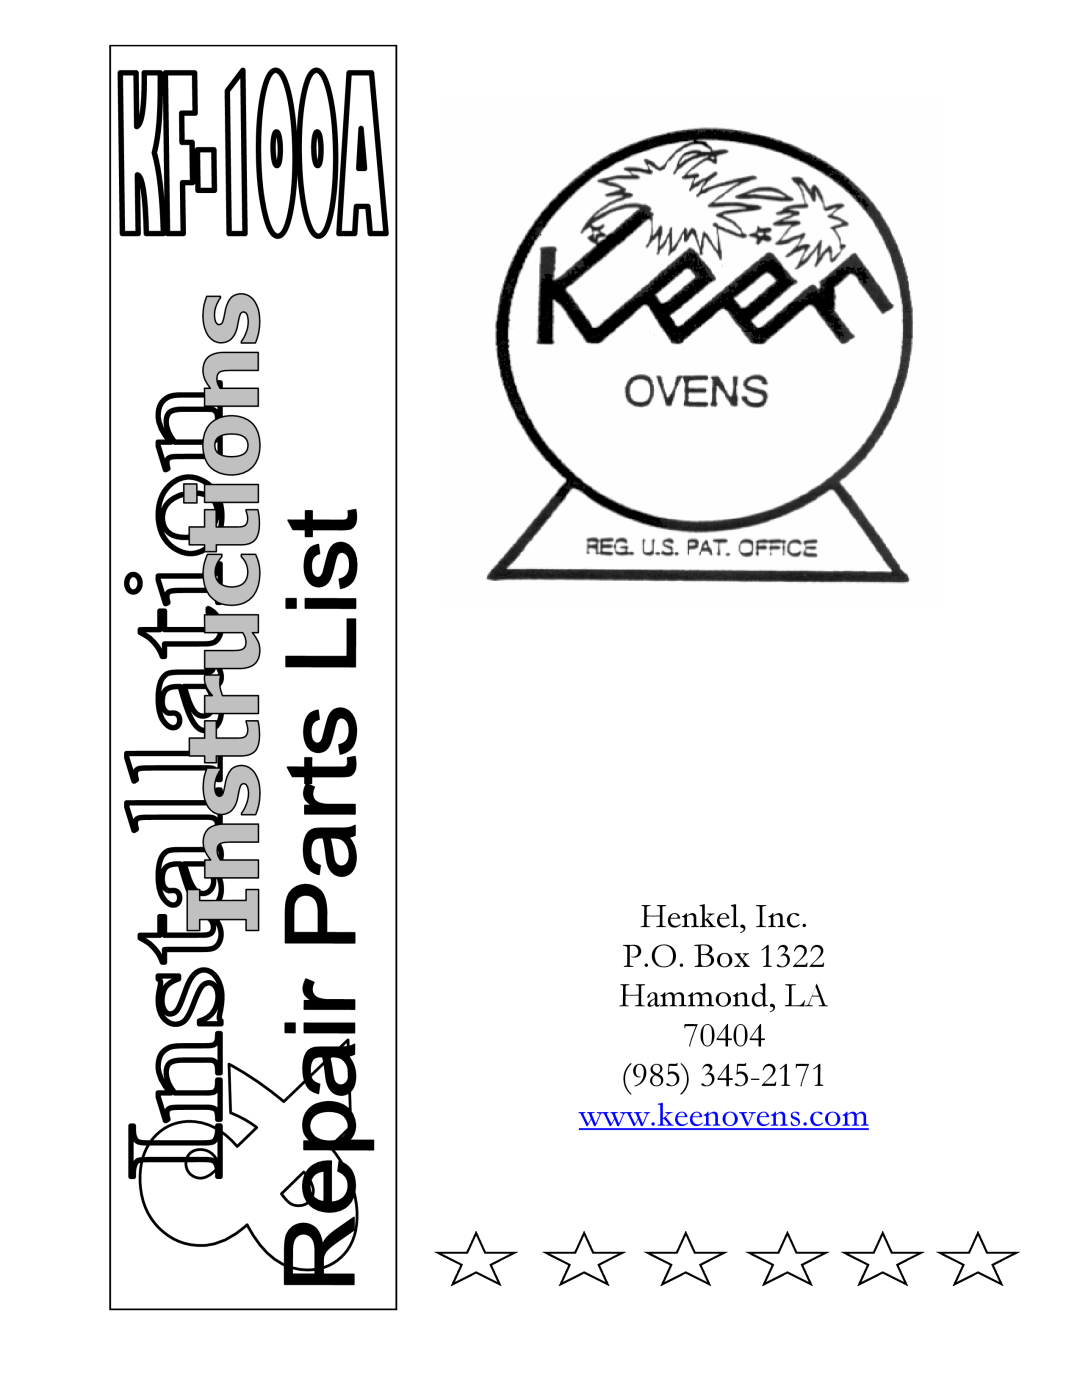 Henkel KF-100A manual Henkel, Inc P.O. Box Hammond, LA, 985345-2171 